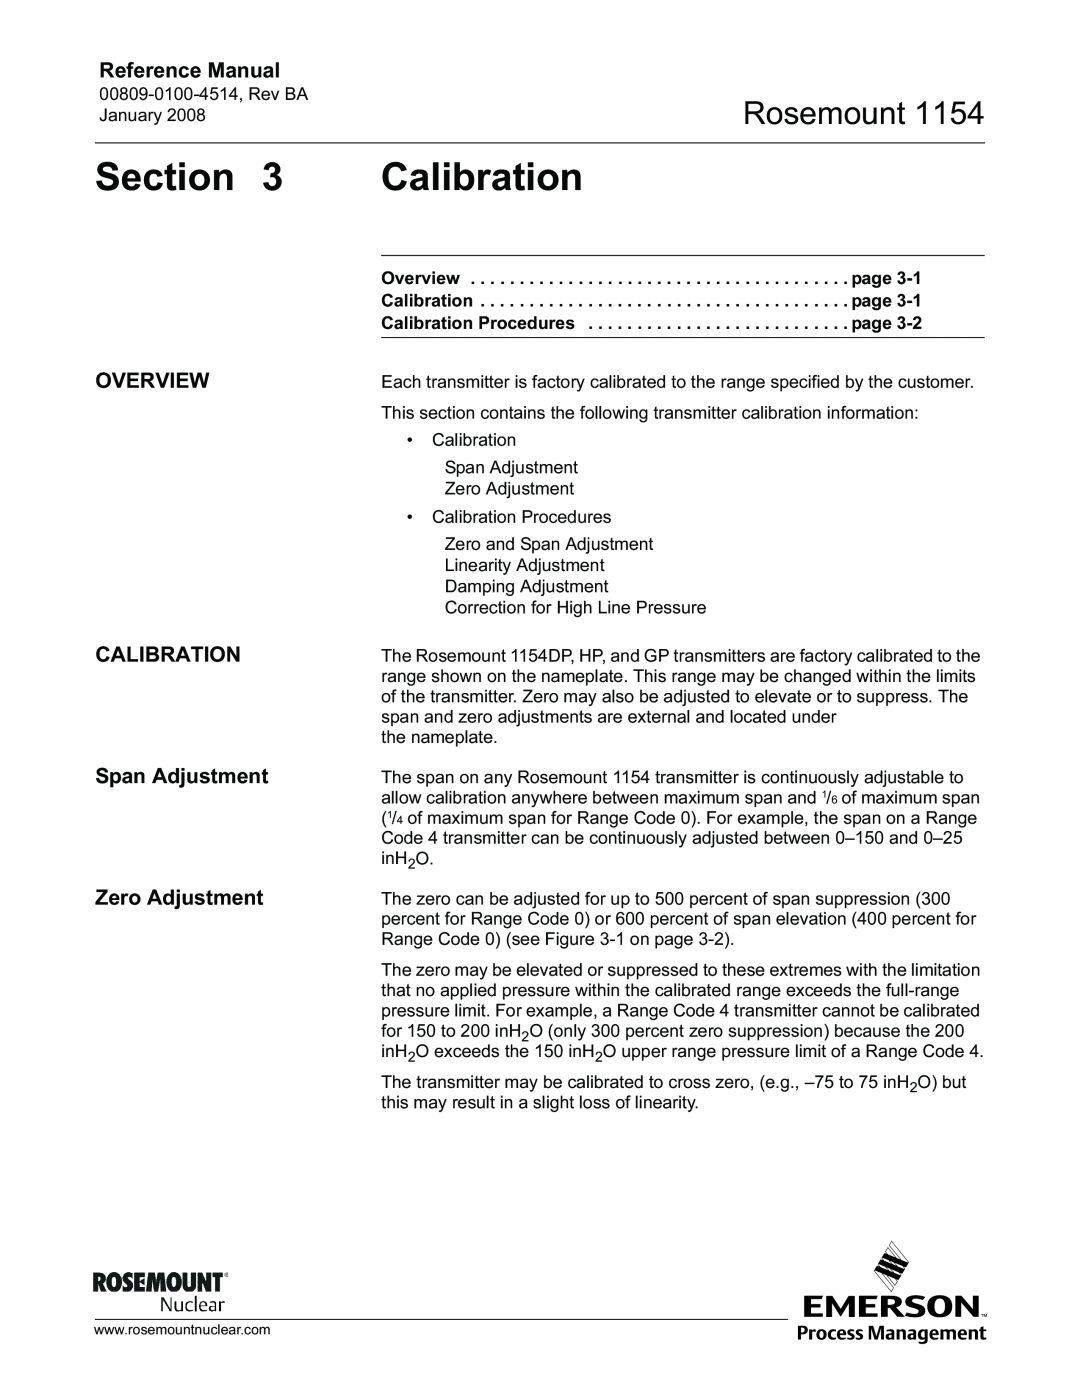 Emerson 1154 manual Calibration, OVERVIEW CALIBRATION Span Adjustment Zero Adjustment, Section, Rosemount, Reference Manual 